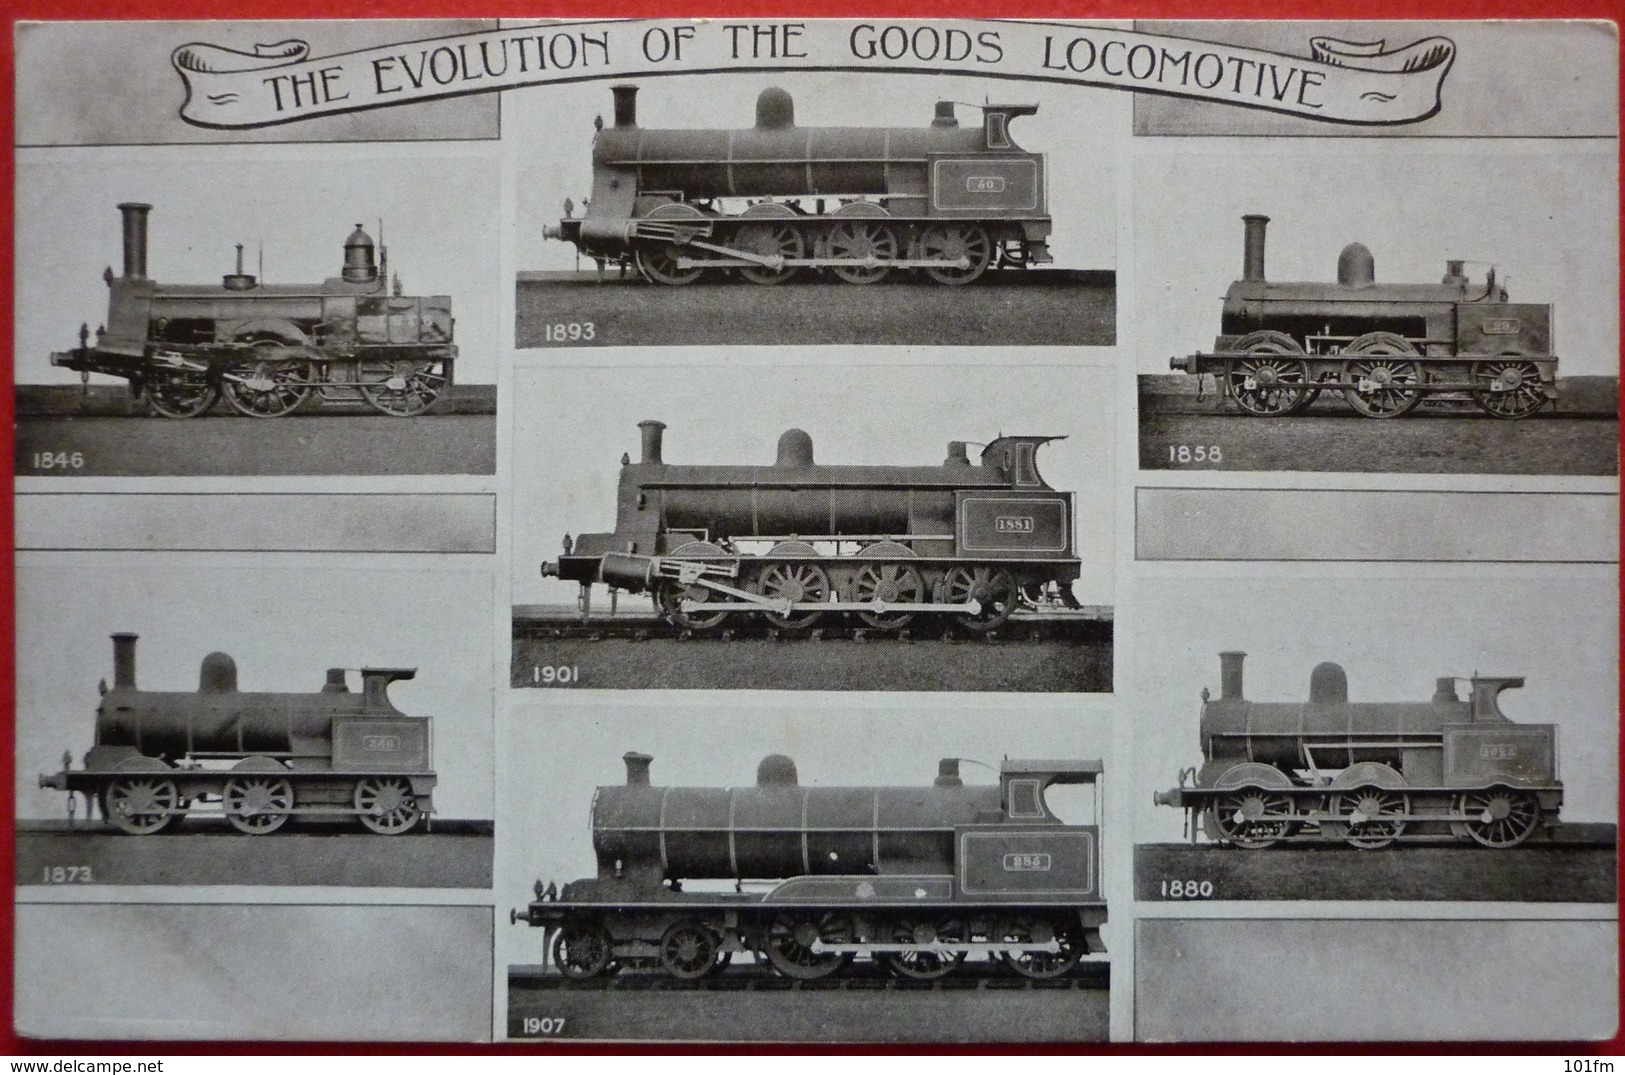 THE EVOLUTION OF THE GOODS LOCOMOTIVE - STEAM LOCOMOTIVE - Treni